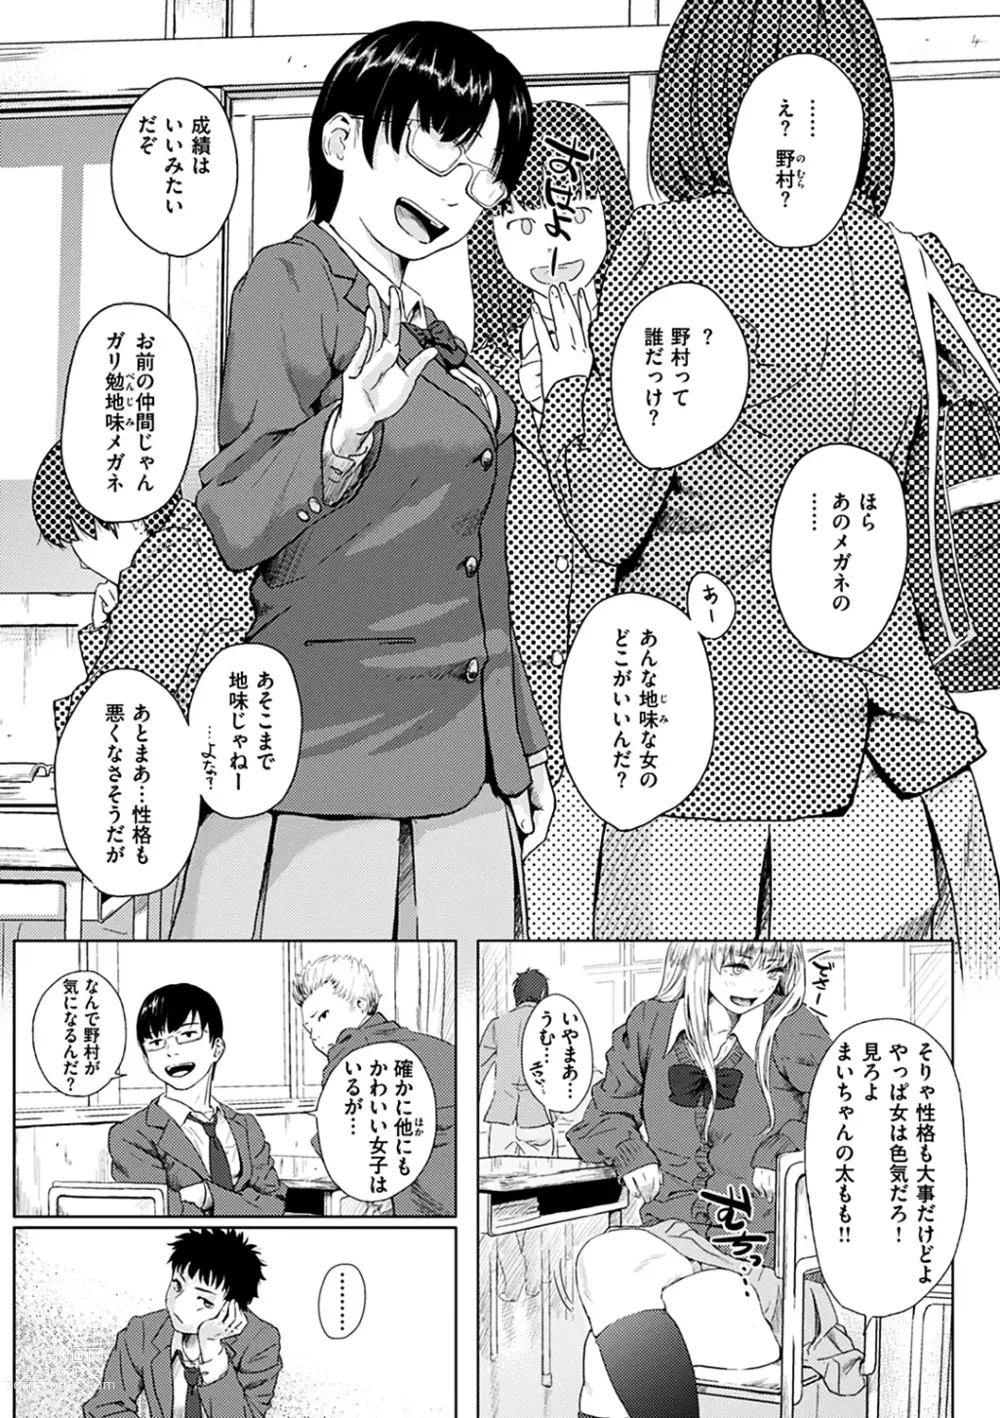 Page 7 of manga Kimi dake ni - I Only Love You...